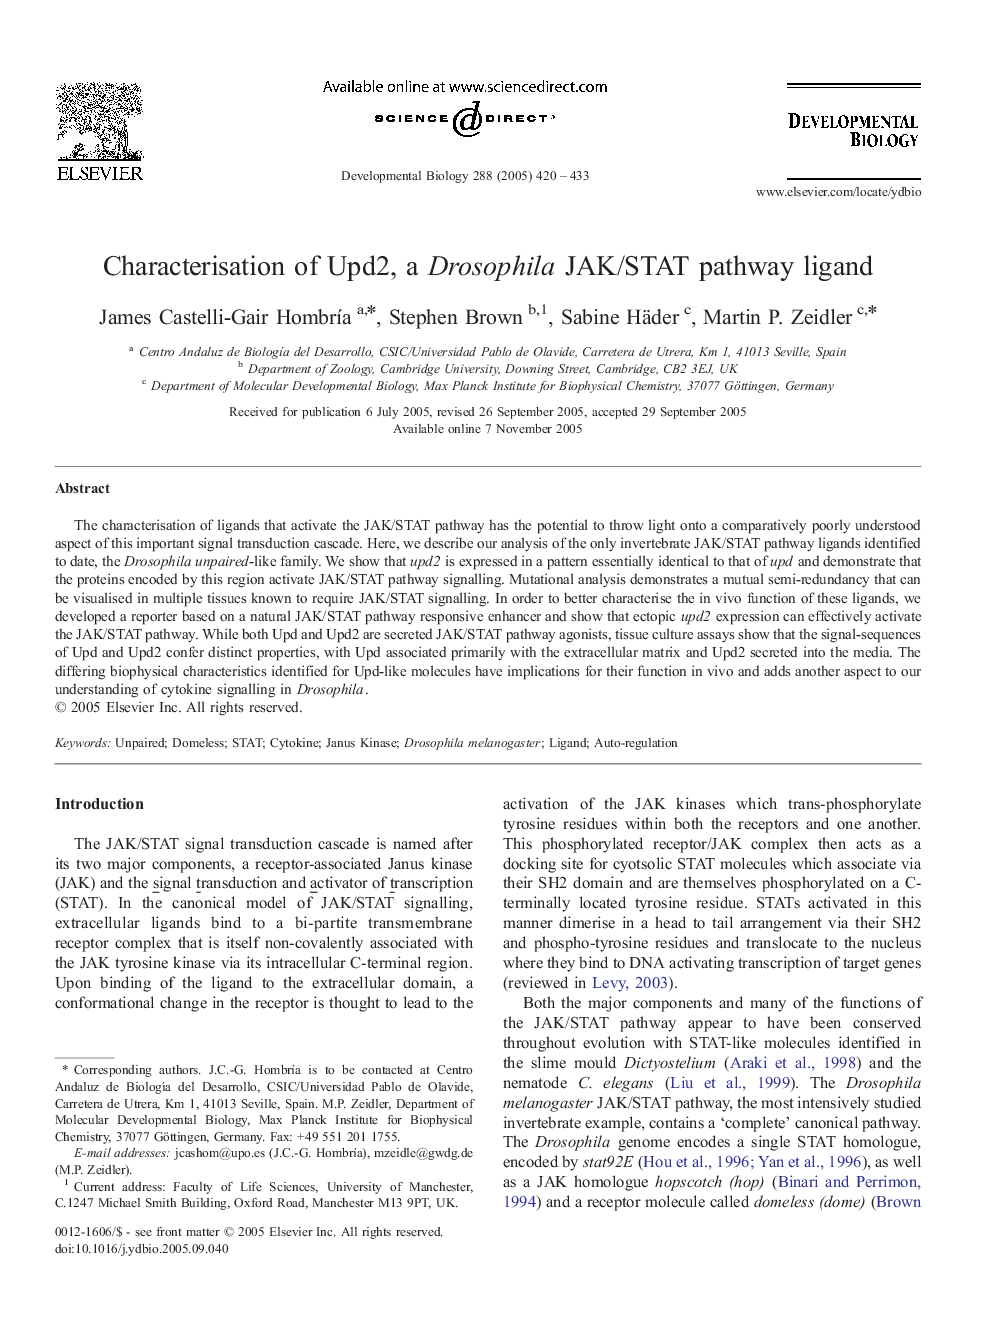 Characterisation of Upd2, a Drosophila JAK/STAT pathway ligand